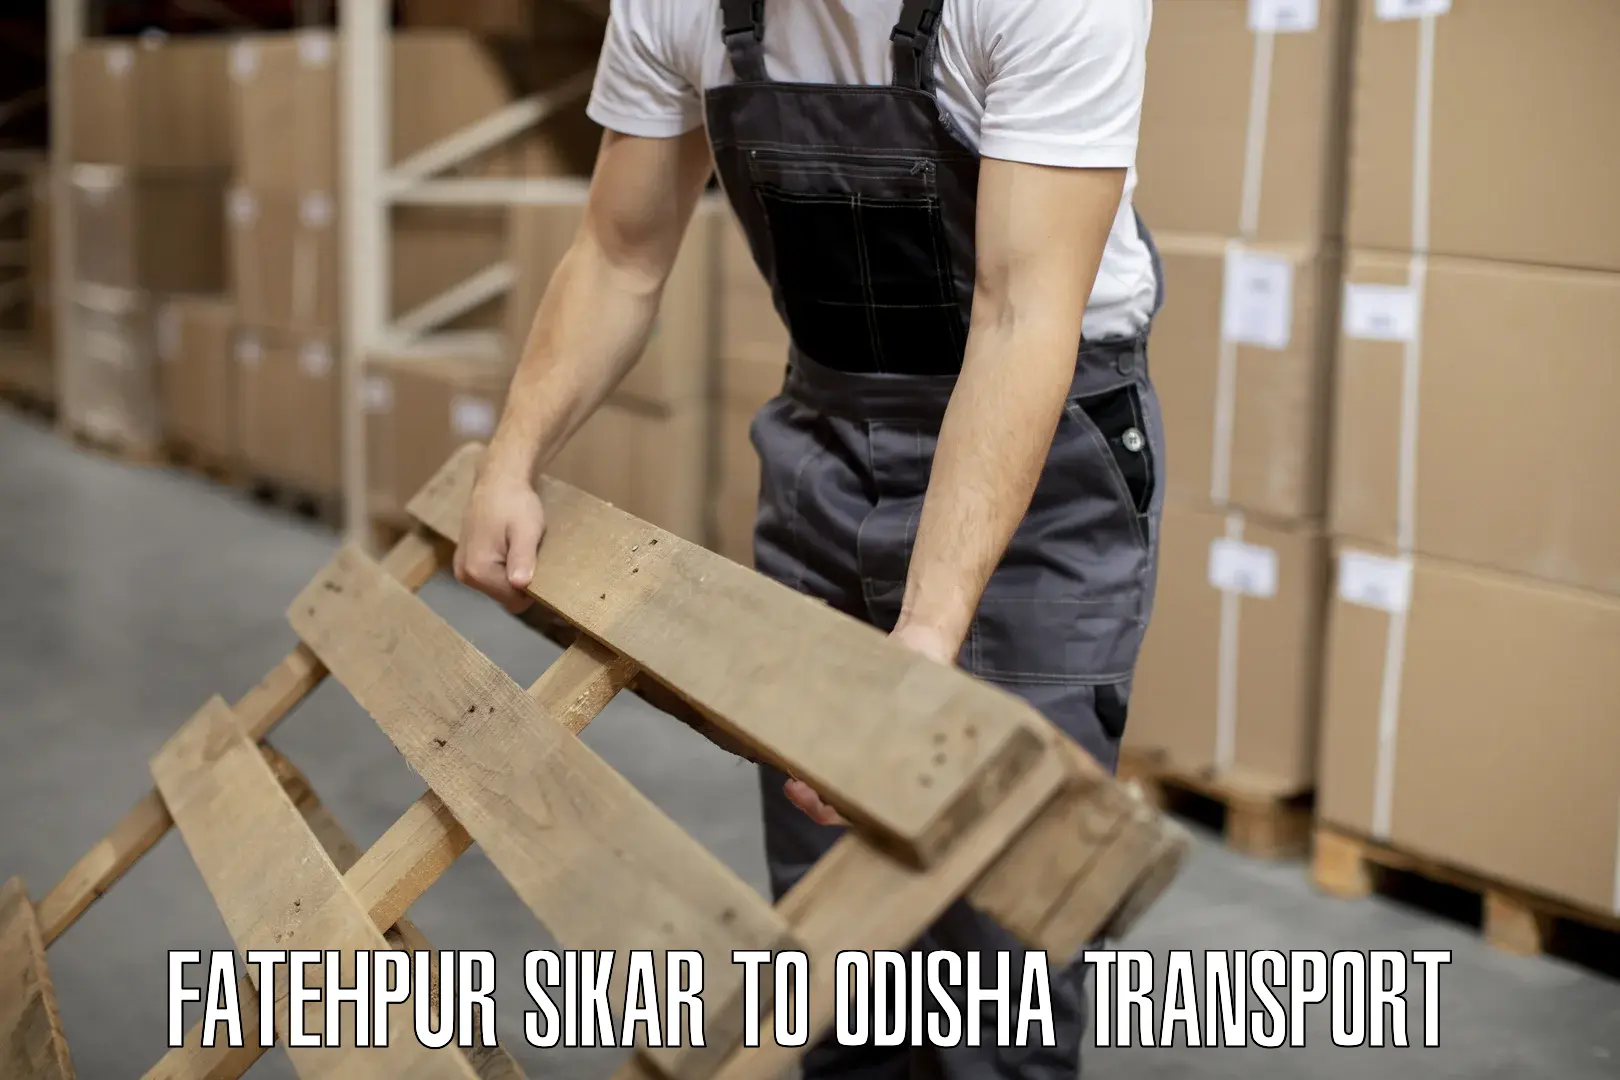 Container transport service Fatehpur Sikar to Daspalla